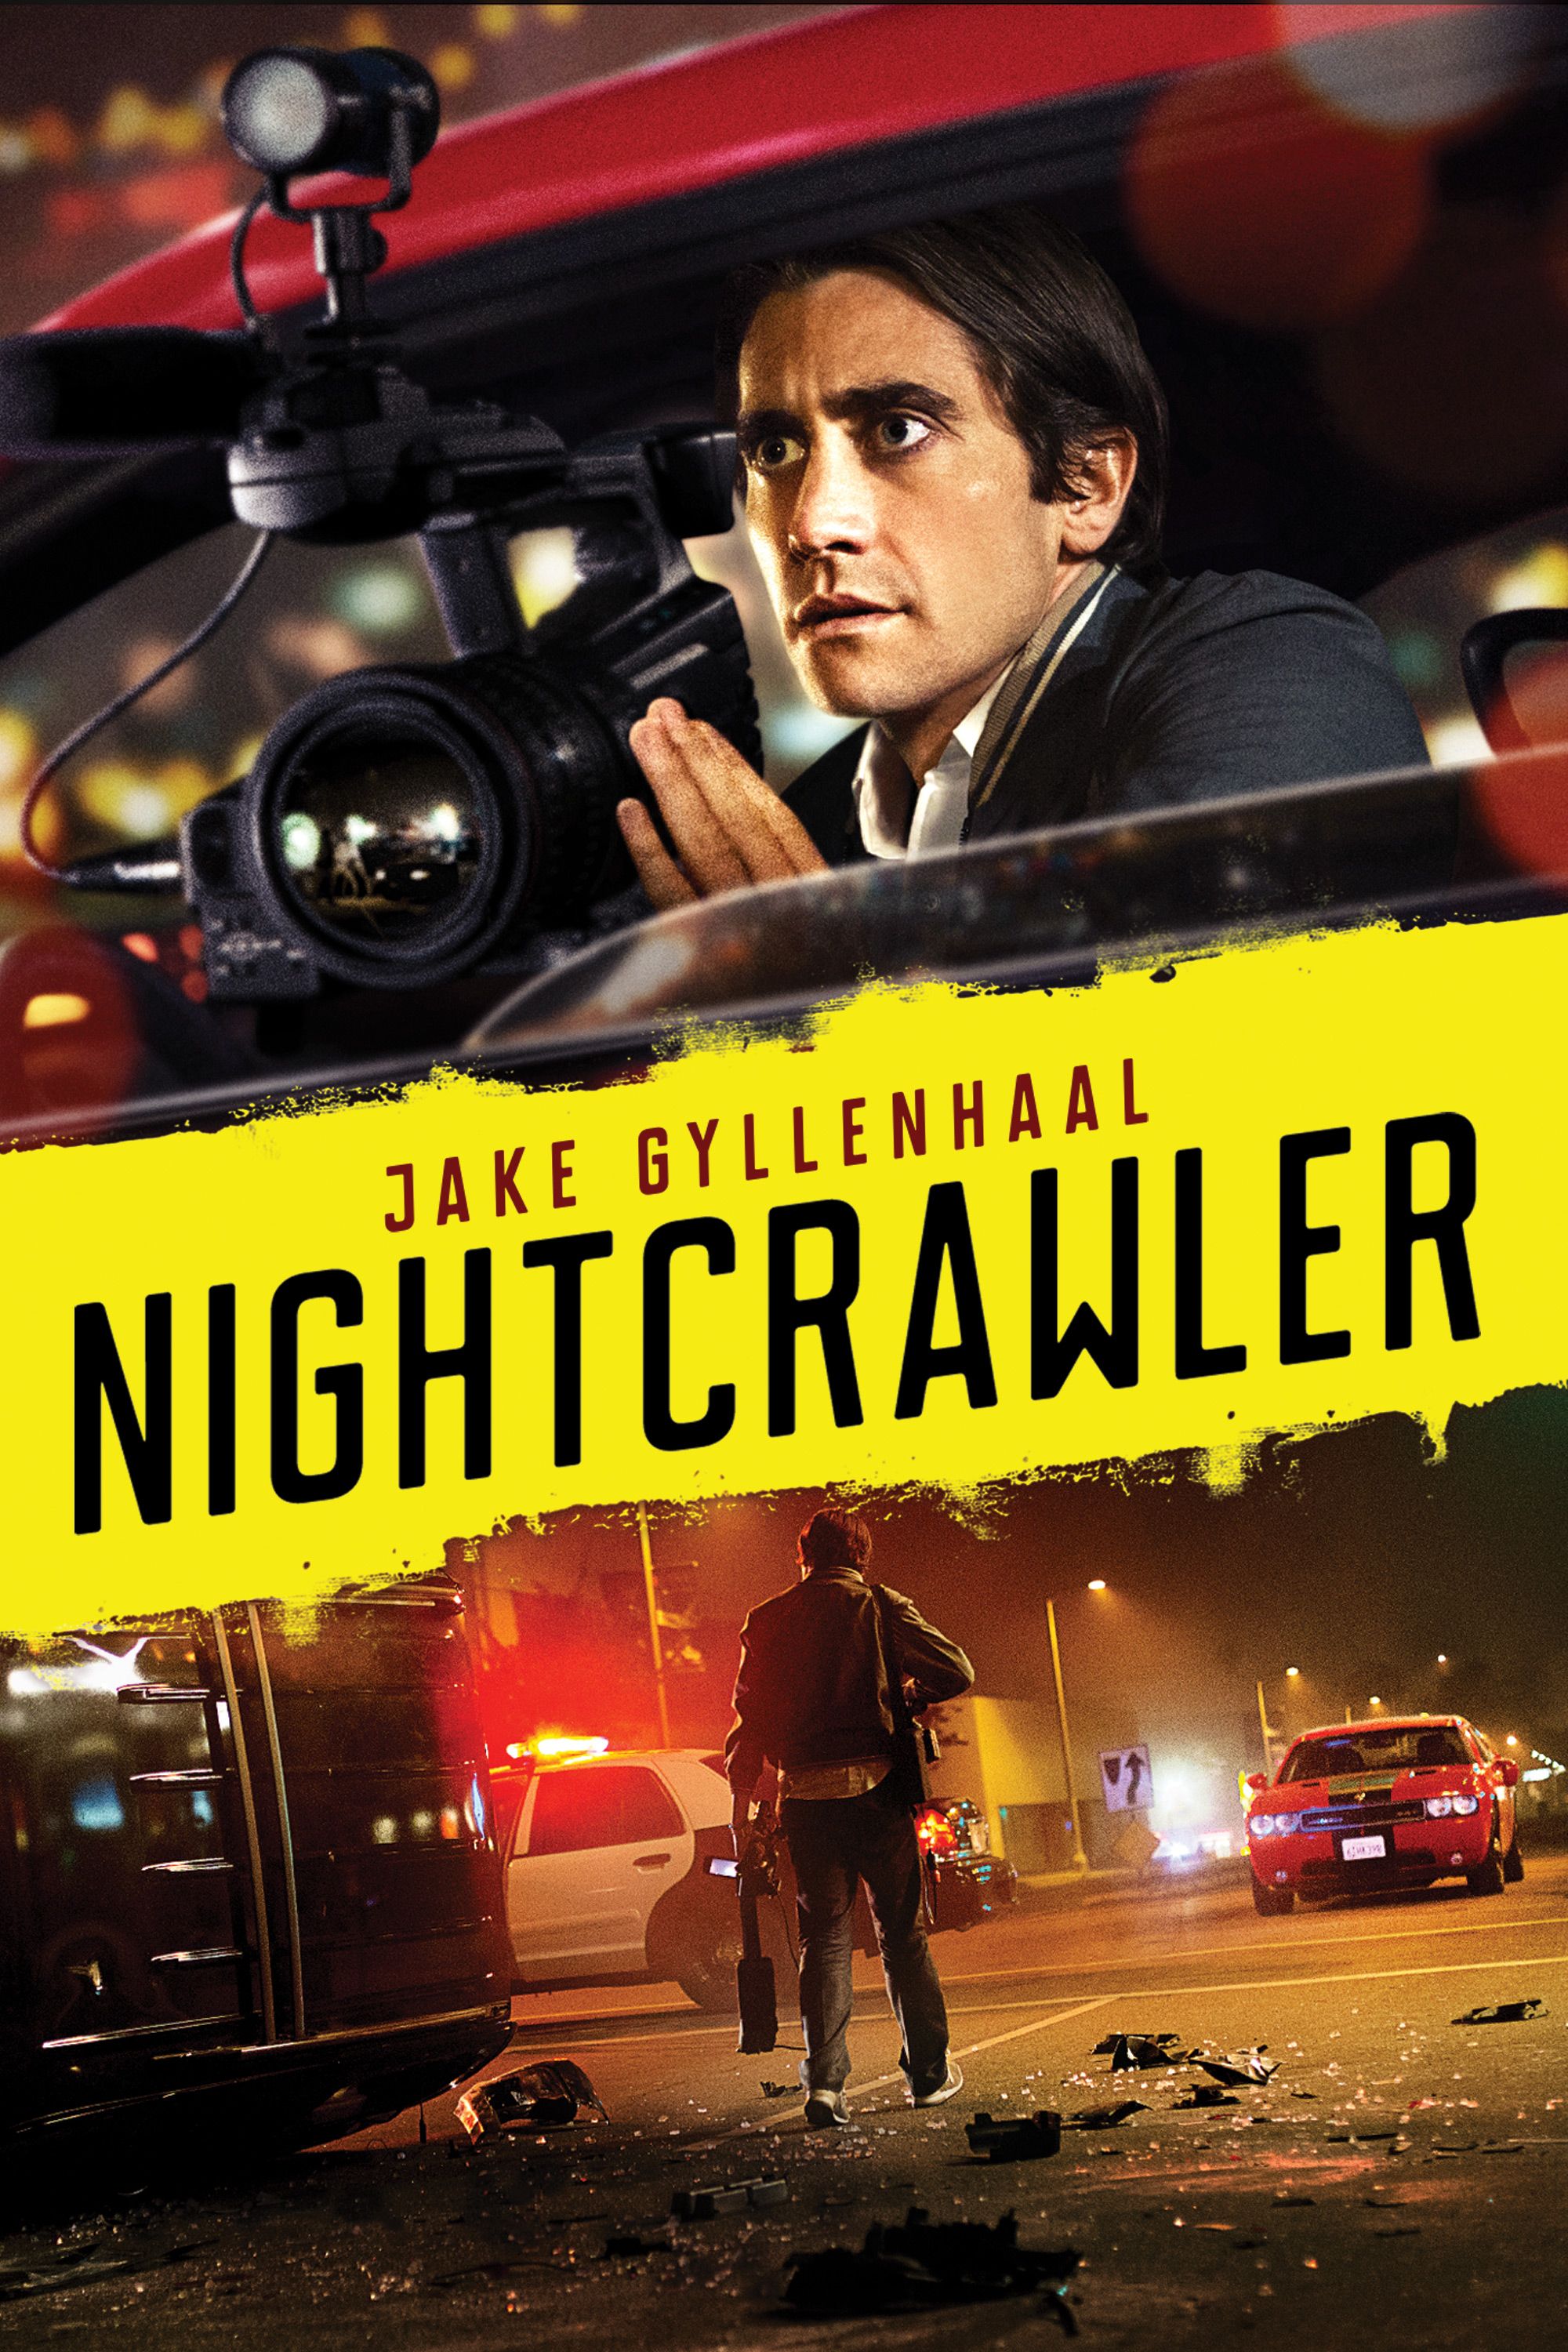 Night Crawlers - movie: watch streaming online